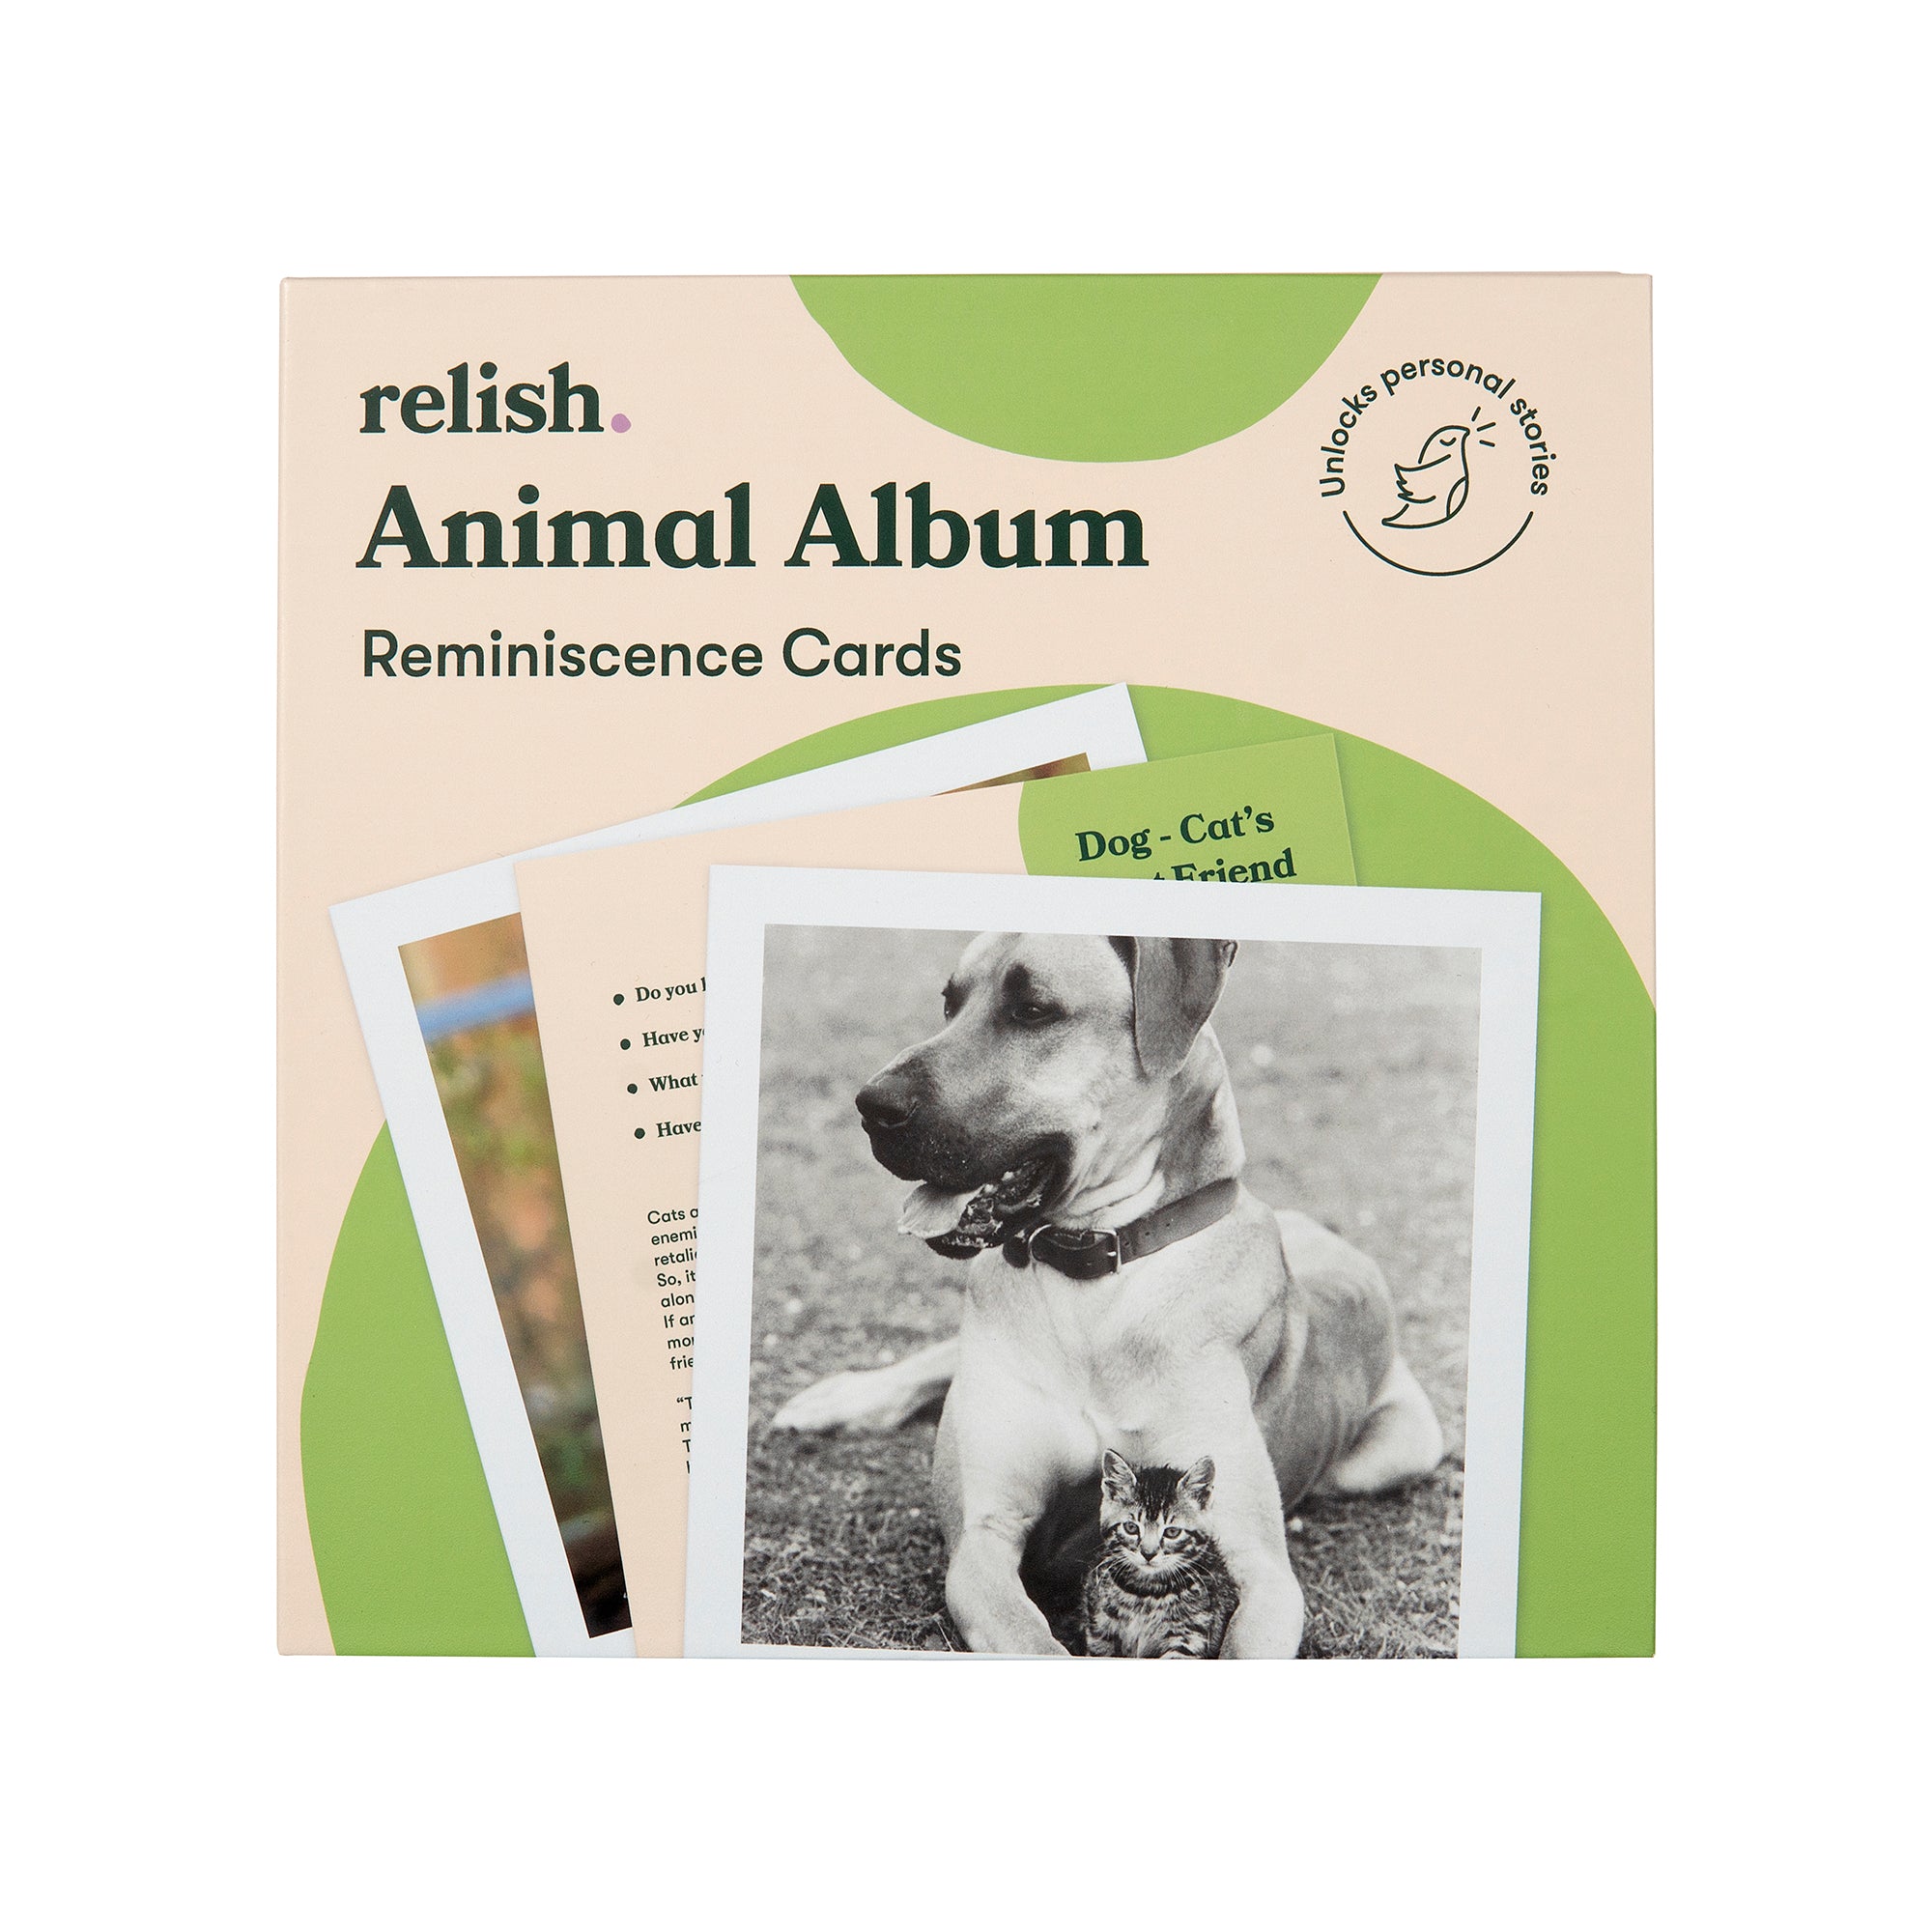 Animal album reminiscence cards